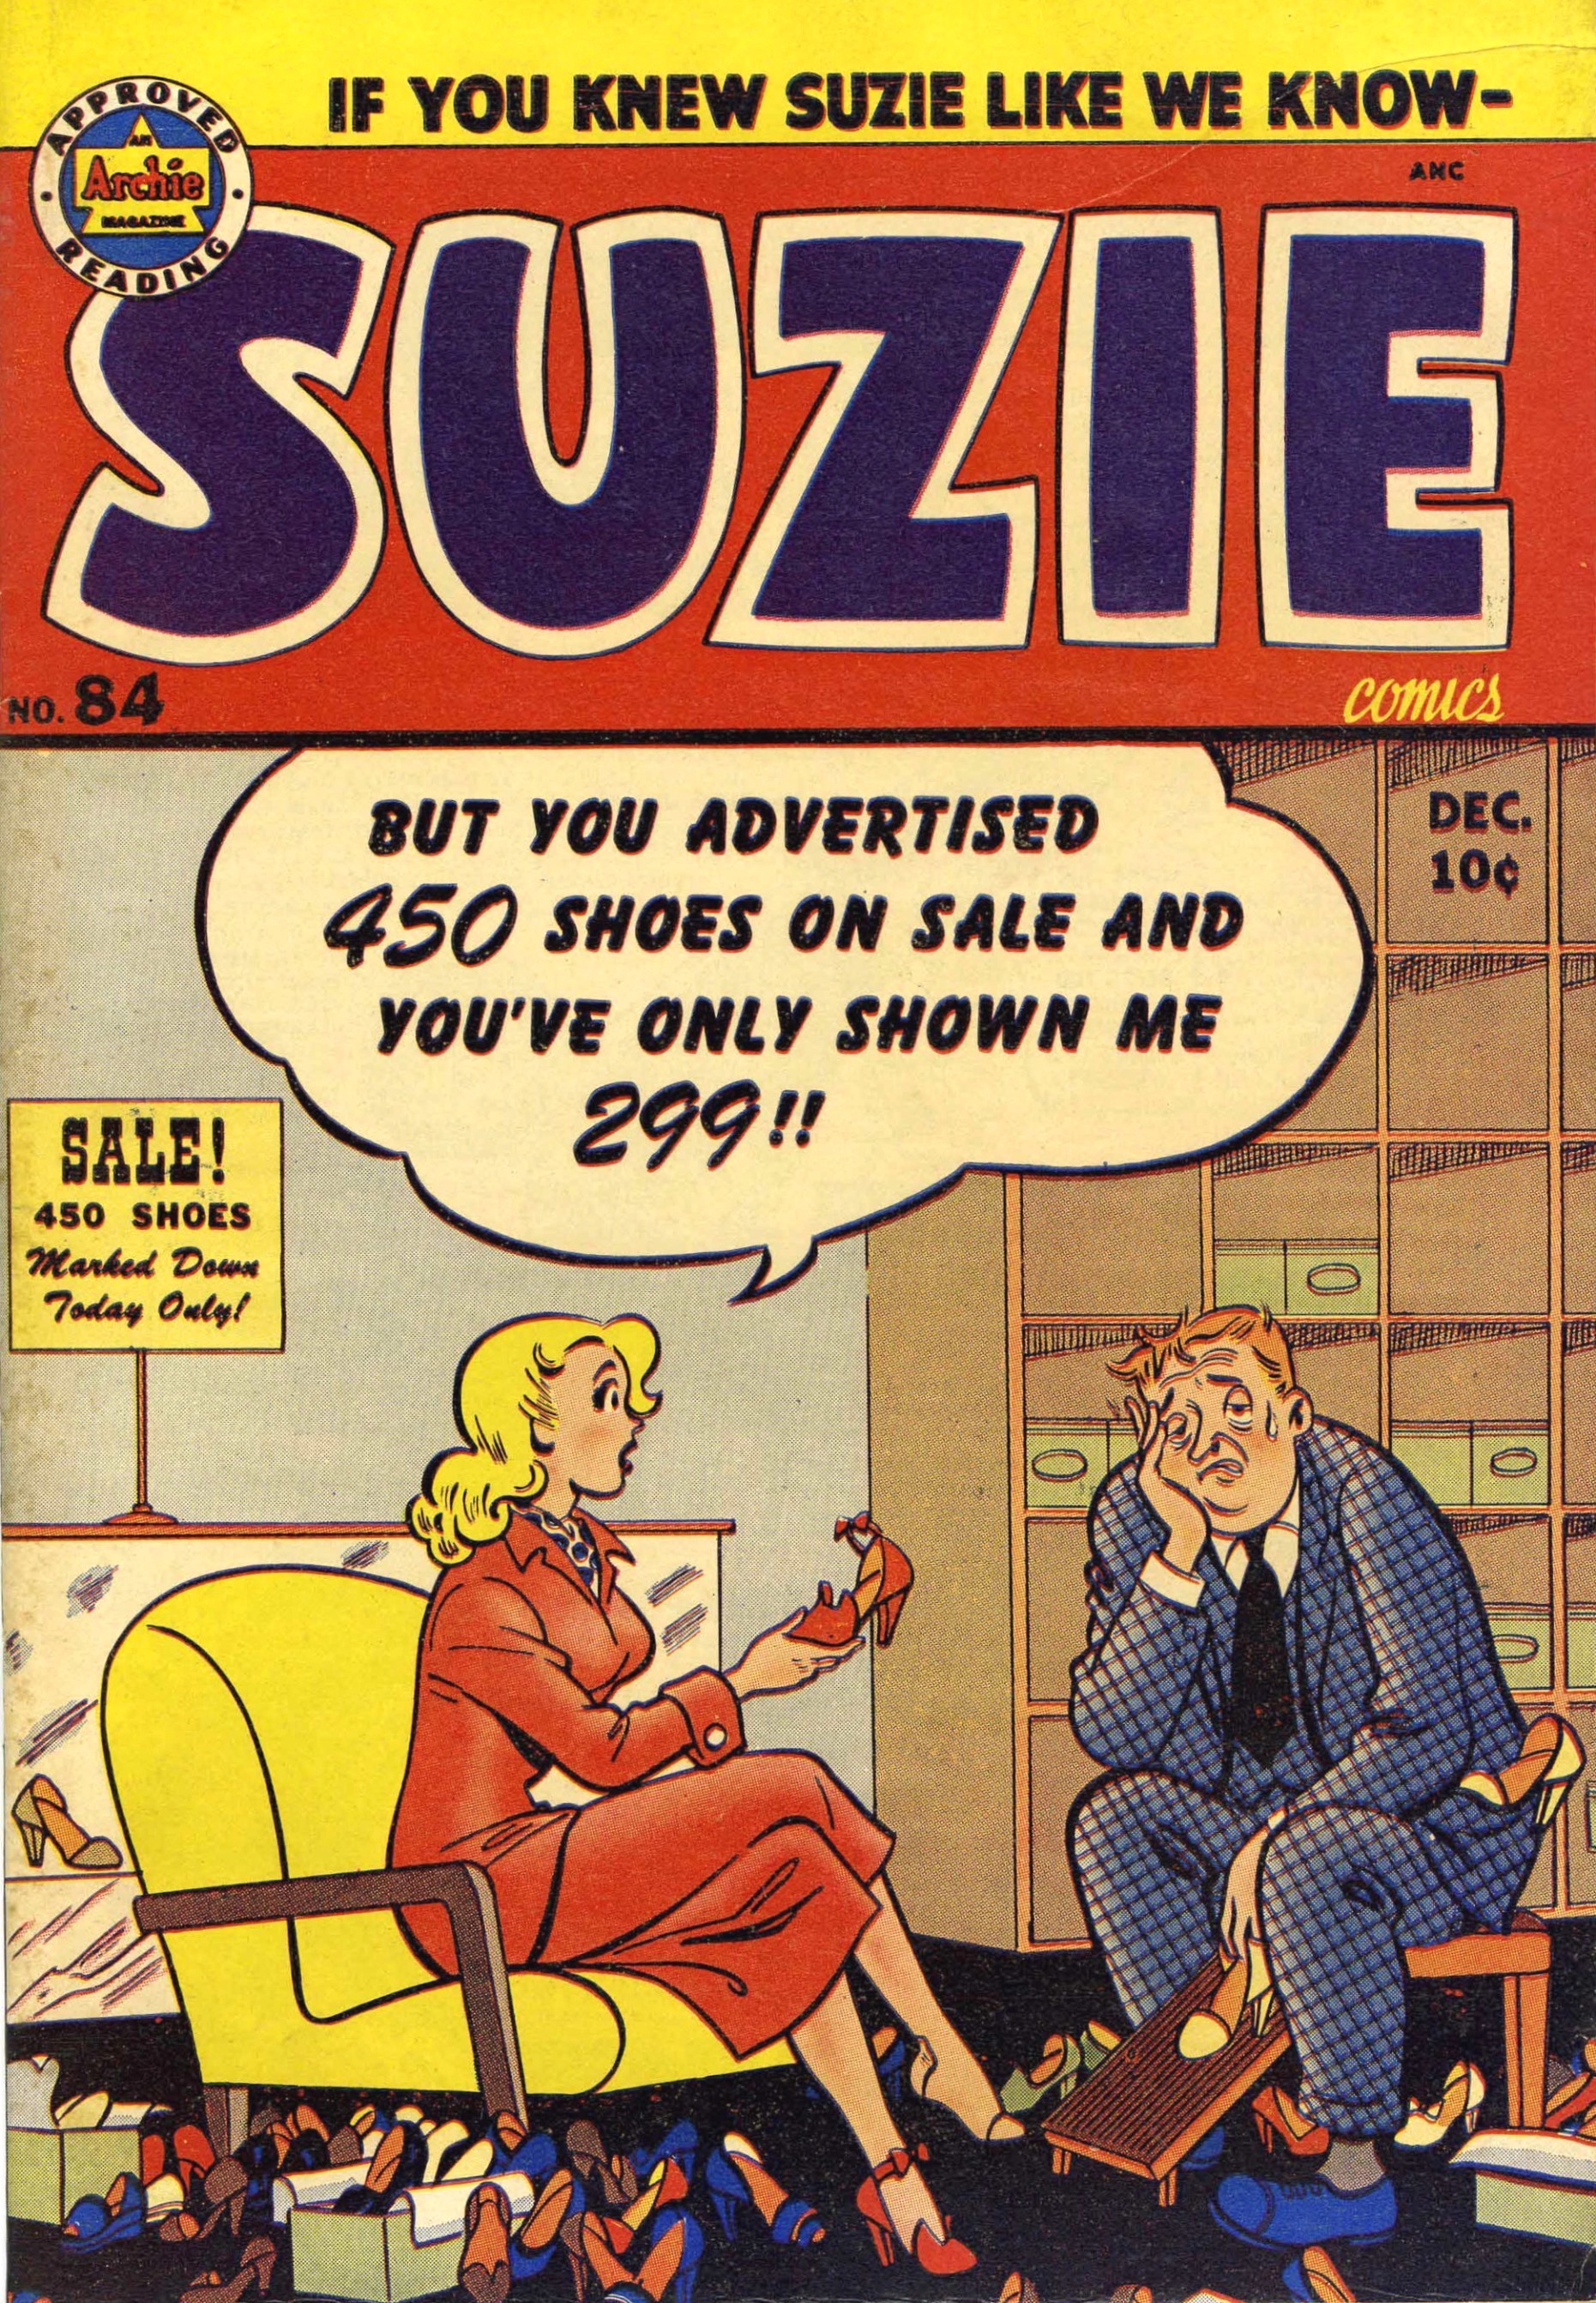 Suzie #84, by MLJ/Archie